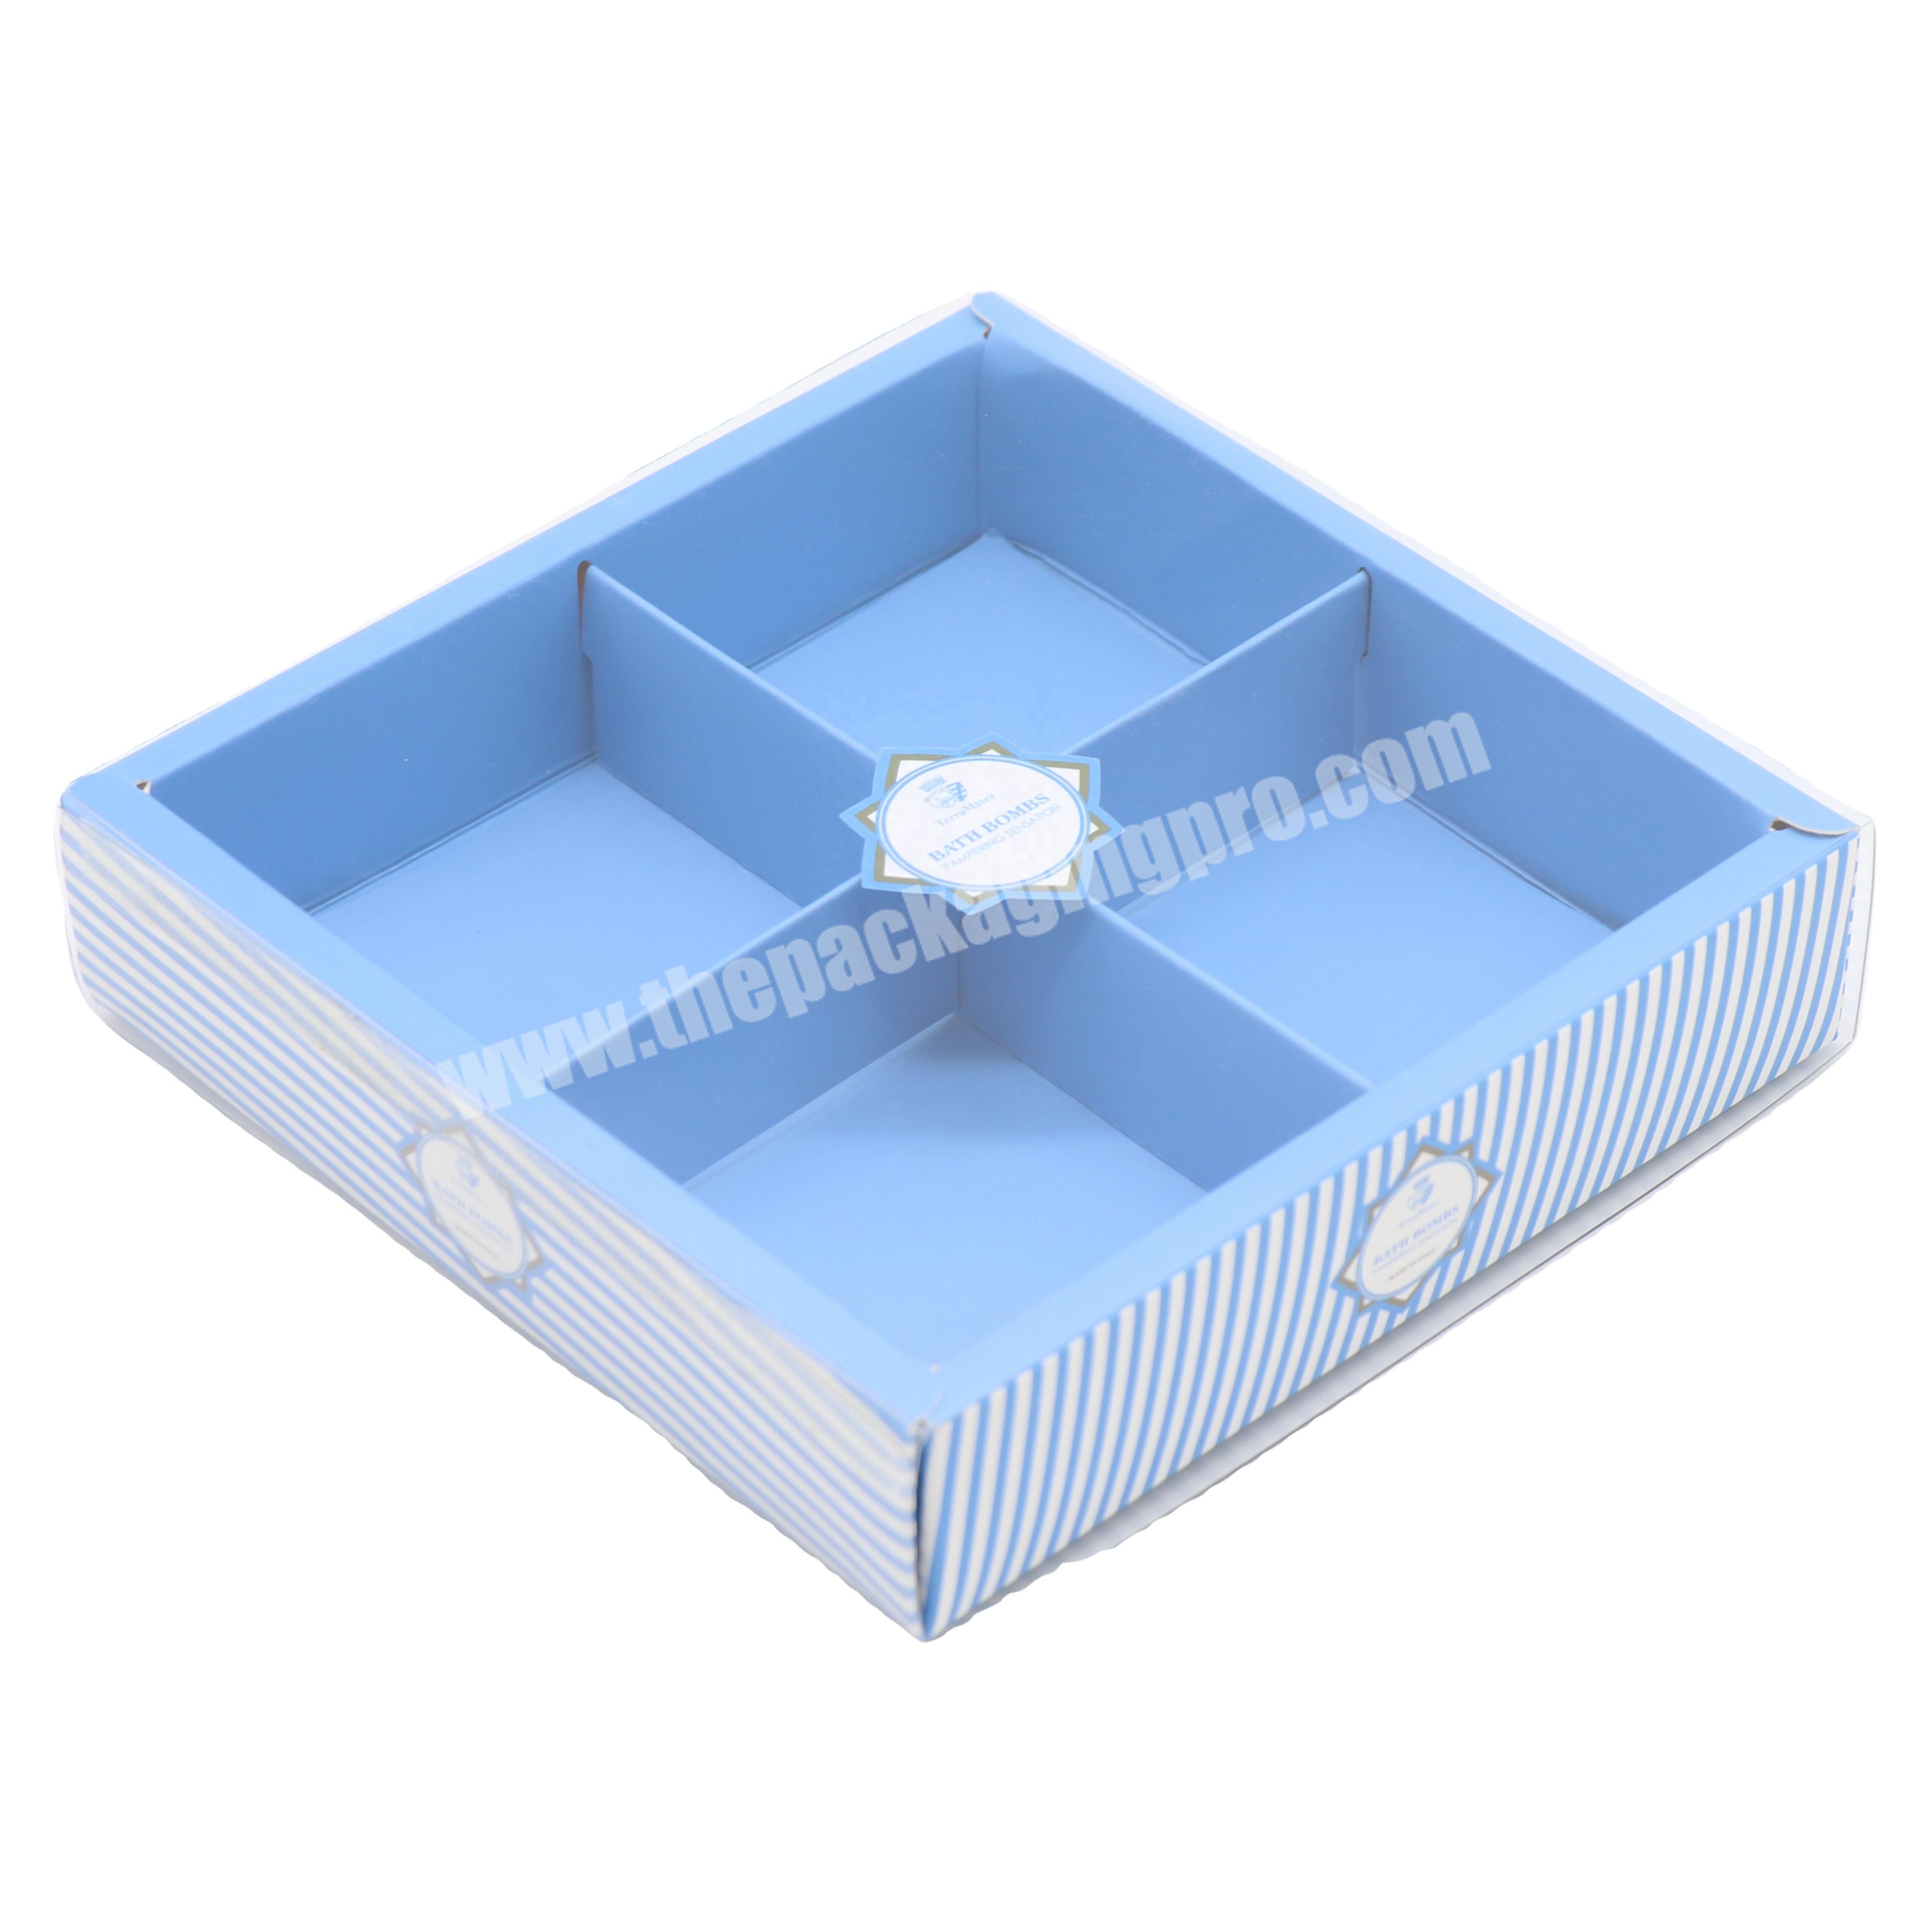 Custom foldable bath bomb packaging box with clear sleeve lid